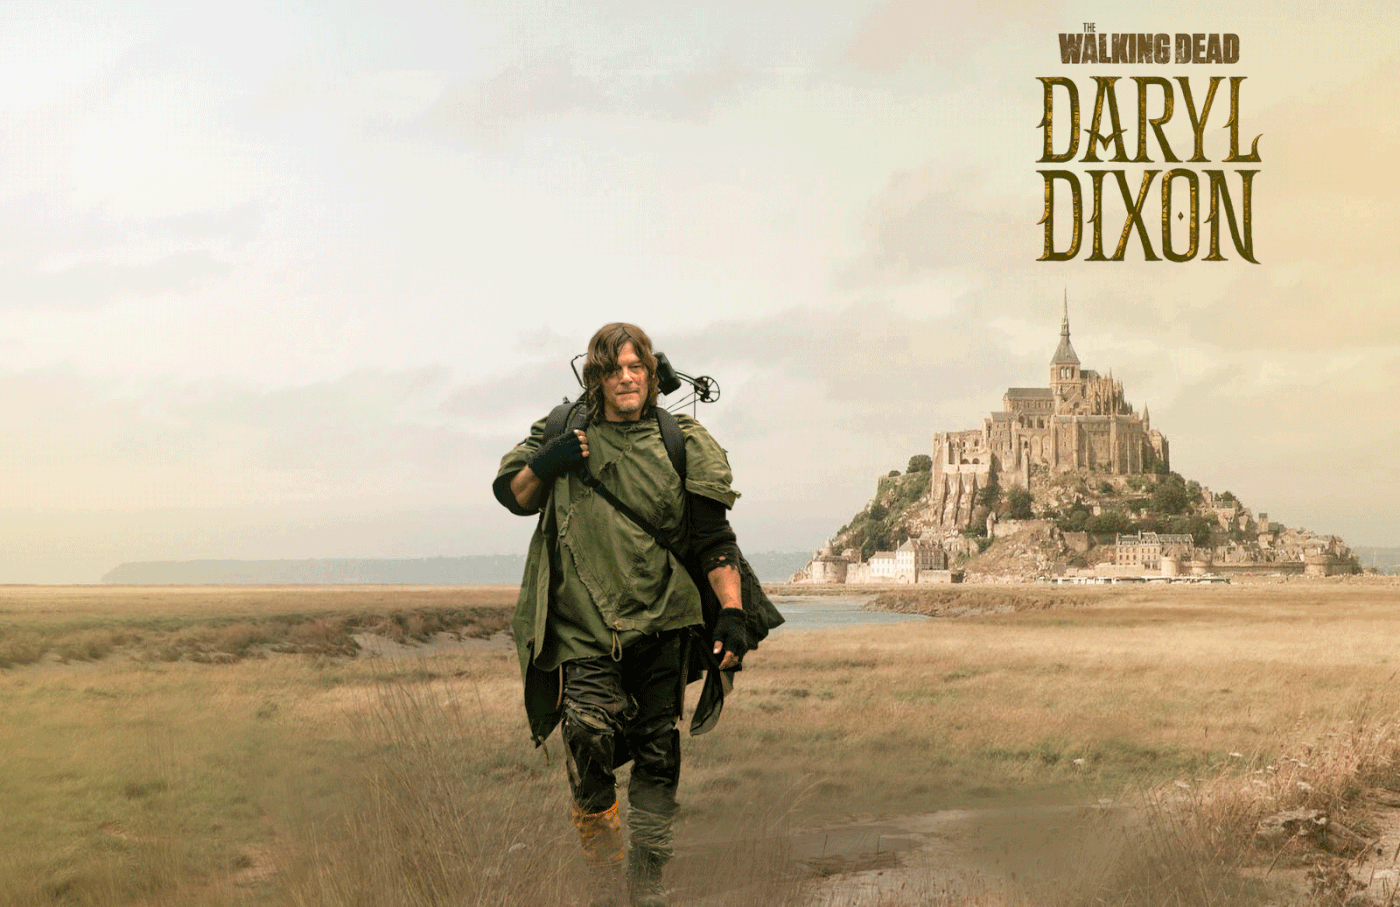 twd The walking Dead daryl dixon AMC poster design